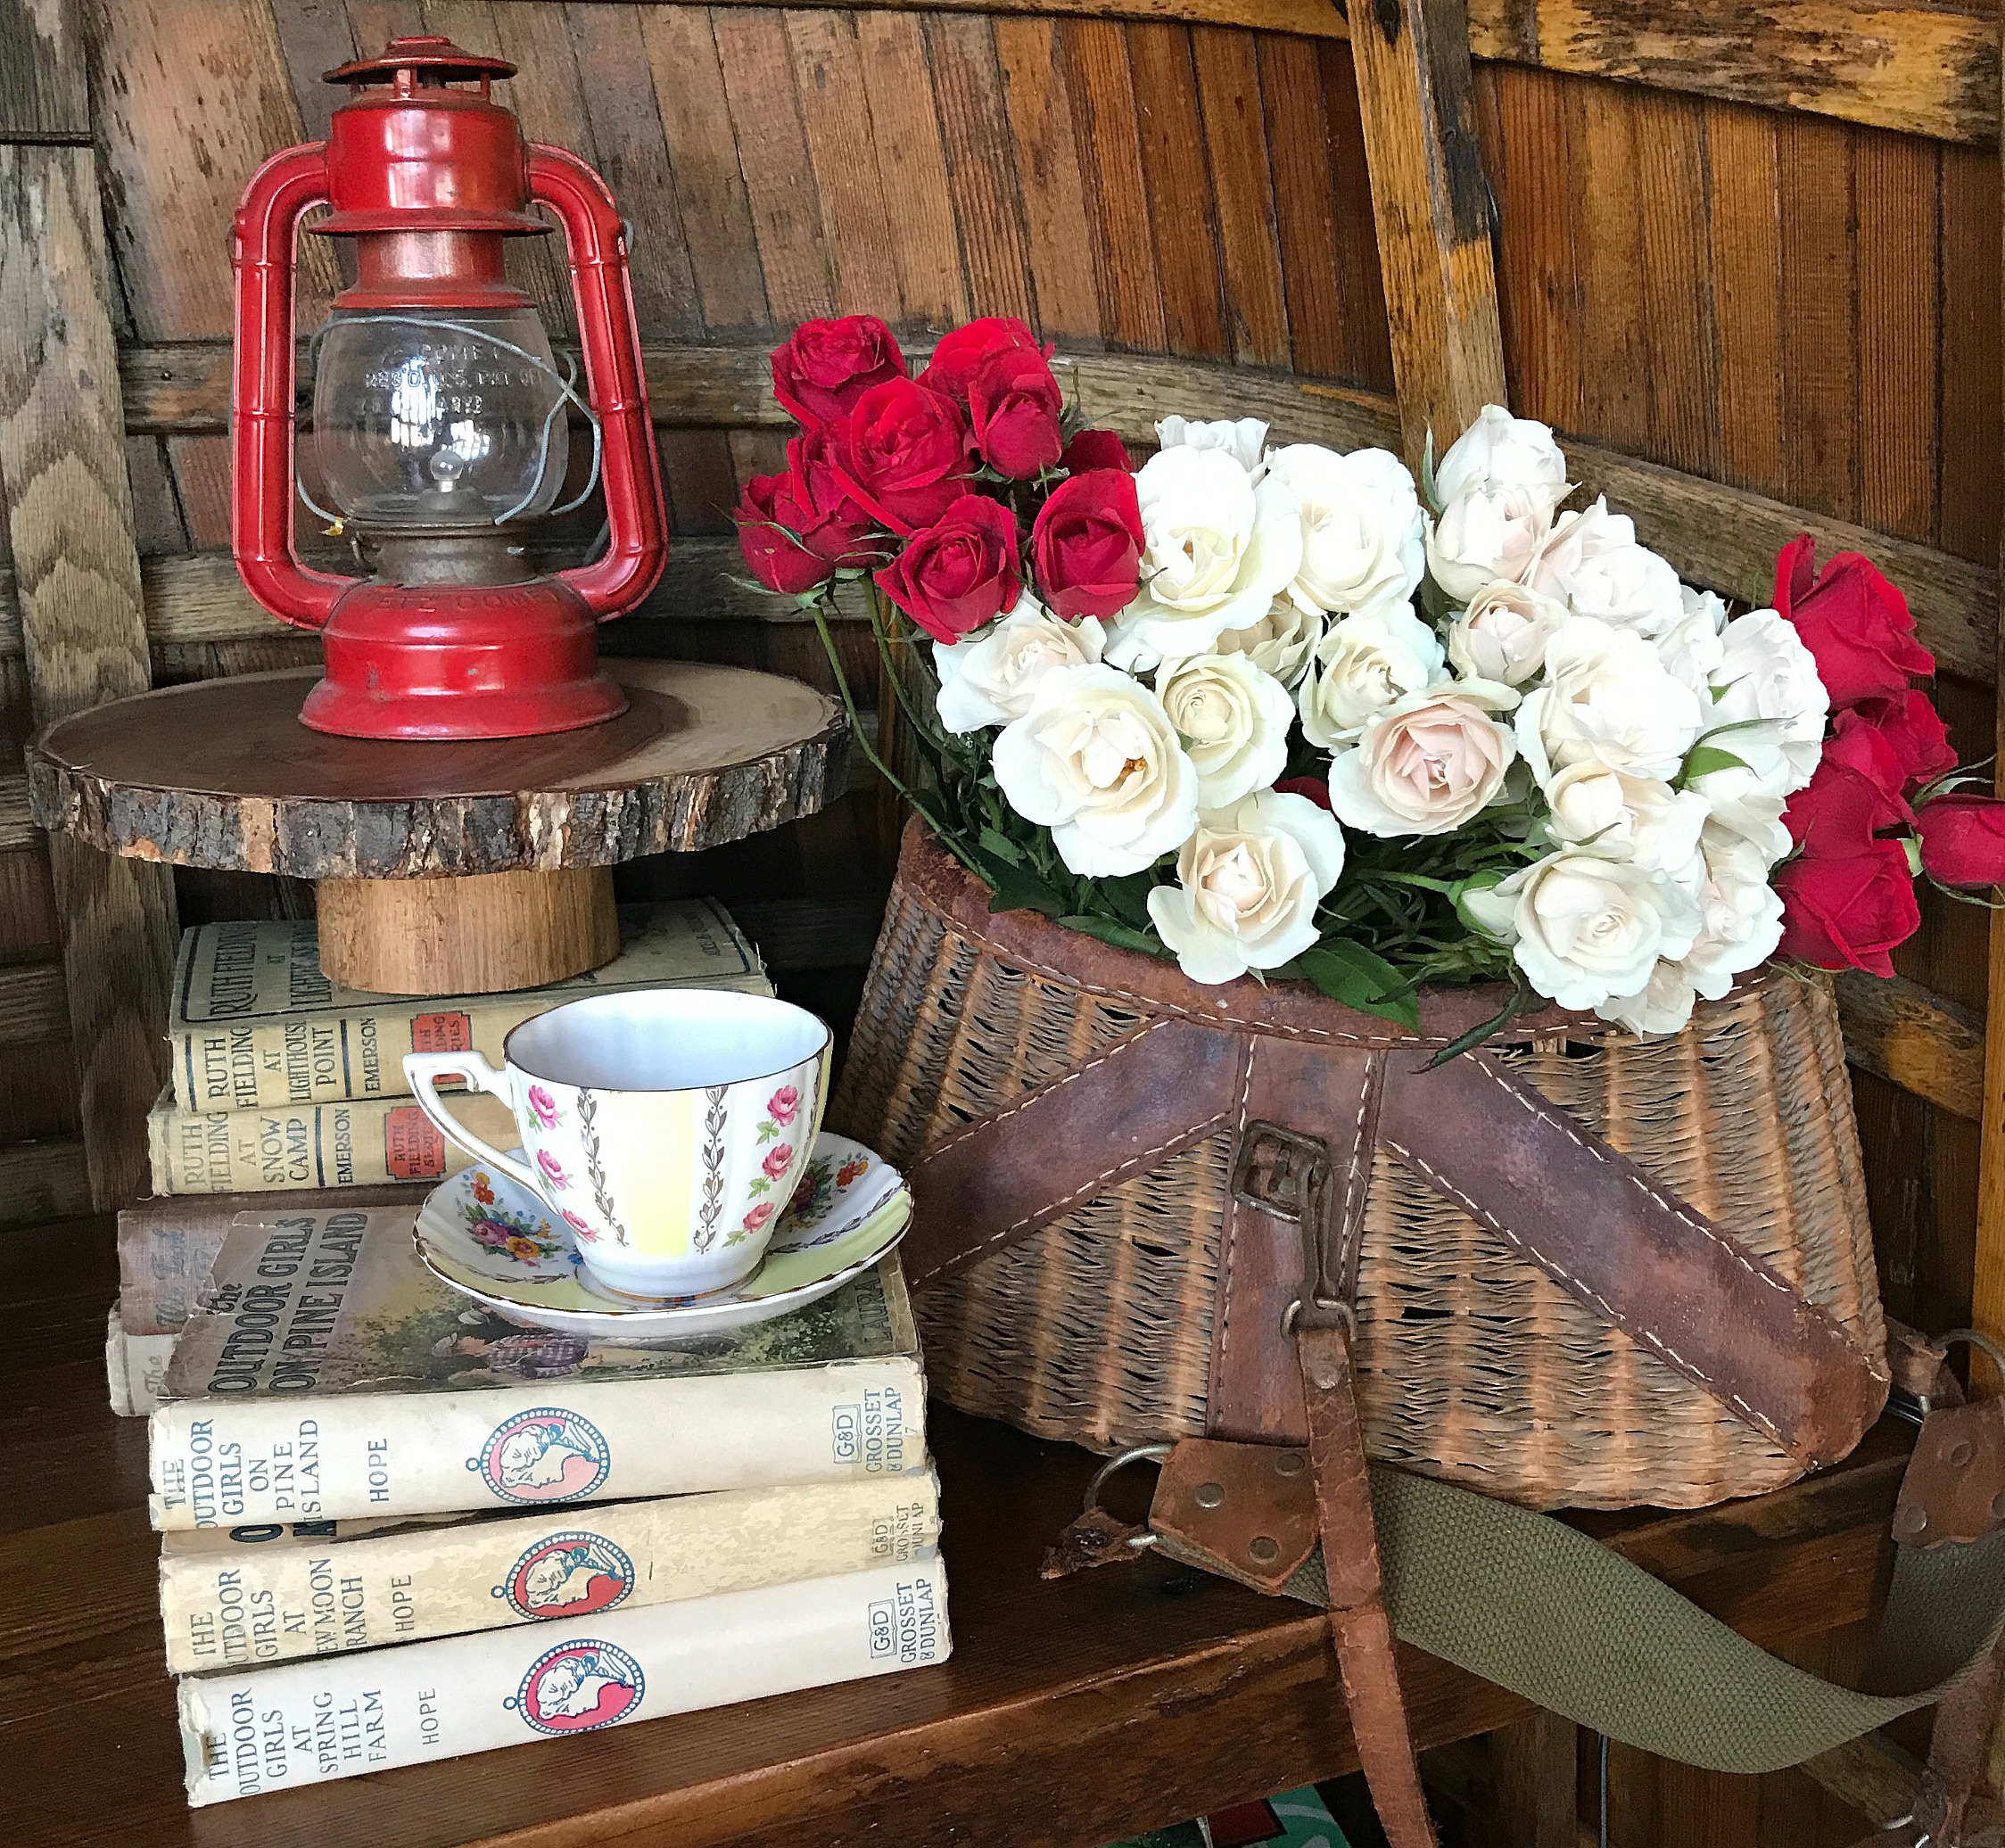 Cabin, Rustic Decor, Cabin Style, Cottage, Teacup, Creel, Vintage Books